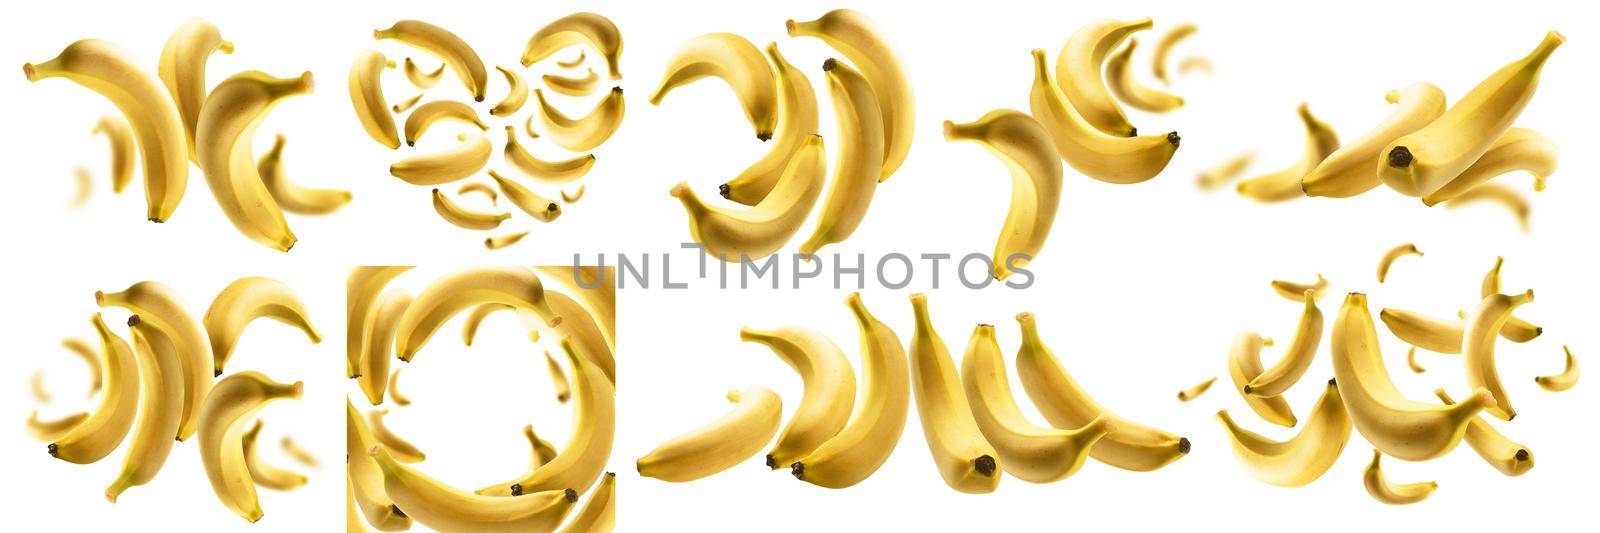 A set of photos. Yellow bananas levitate on a white background.